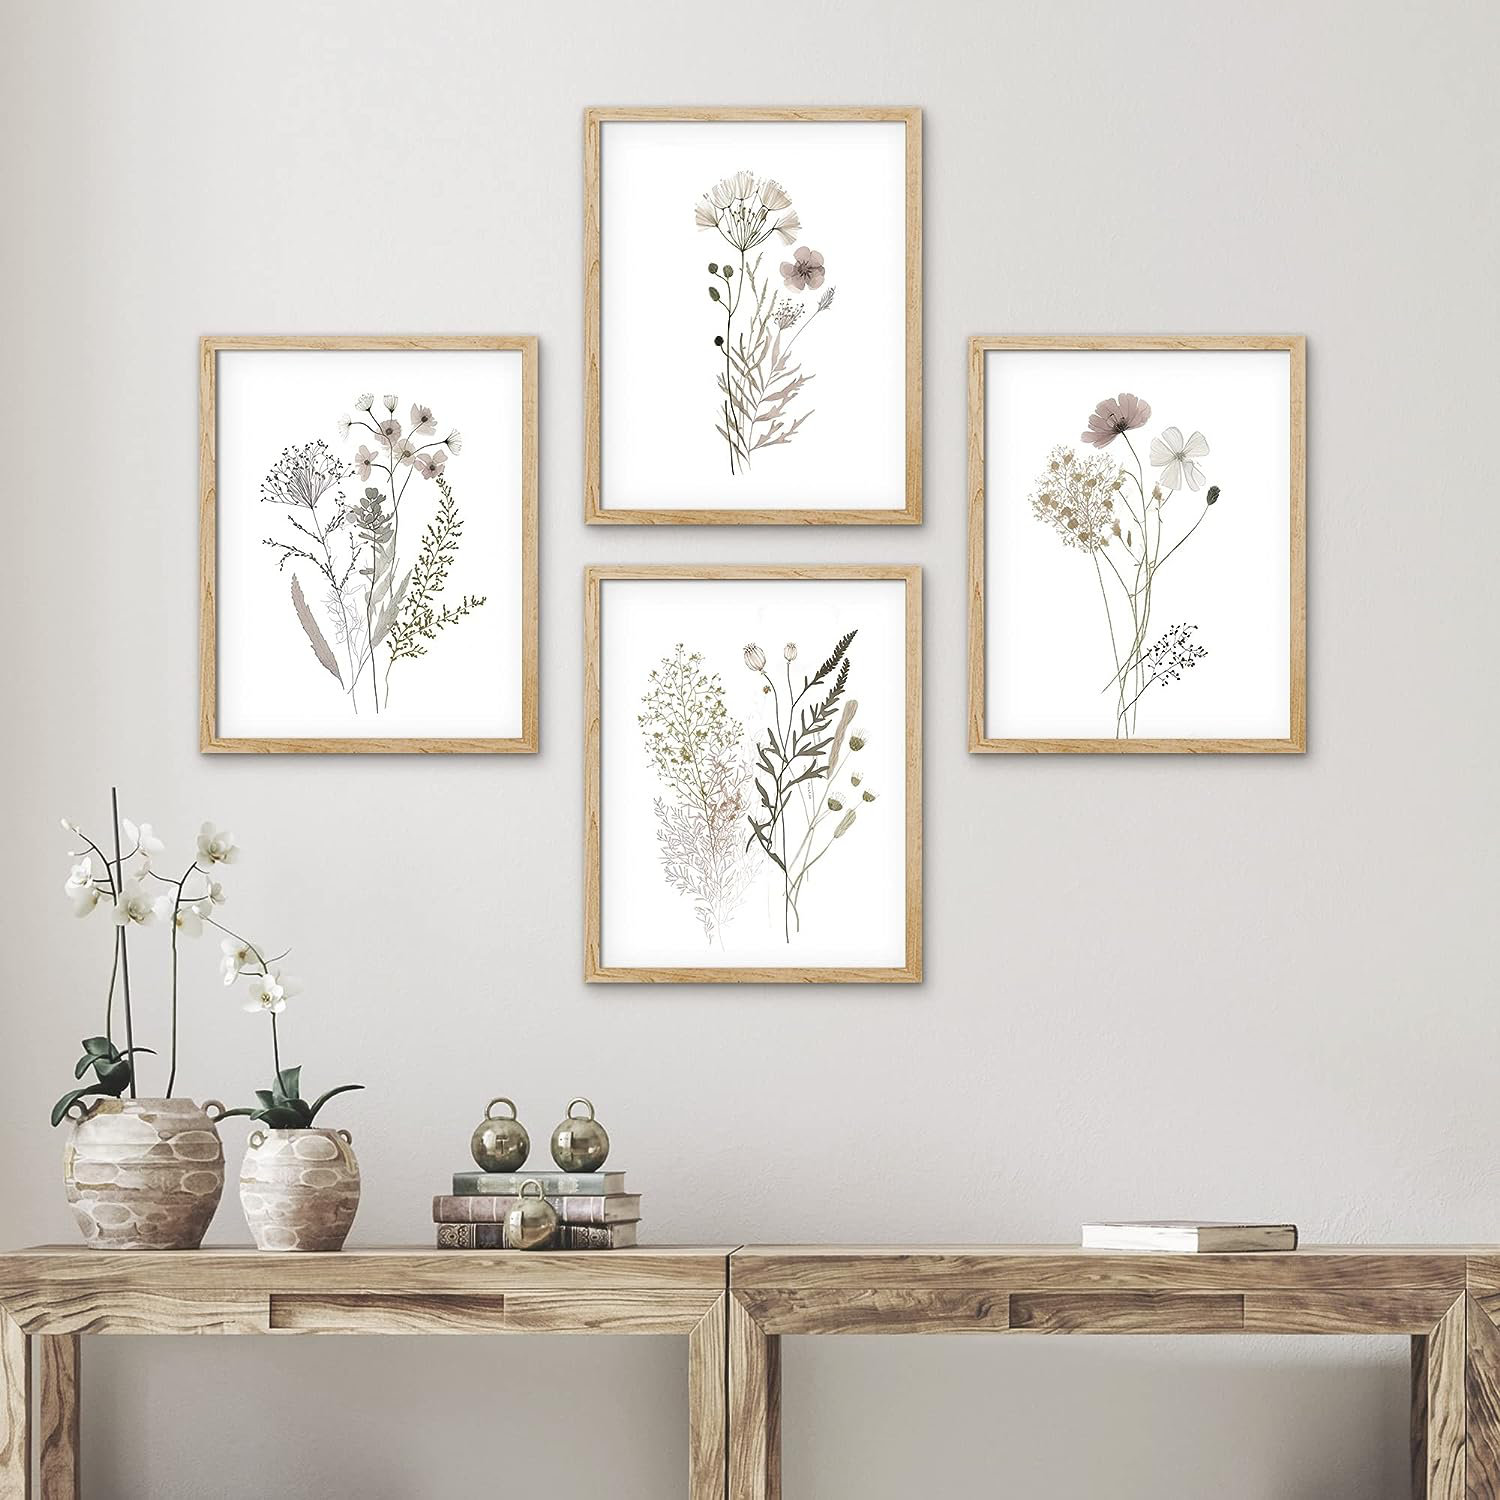 Handmade Paper Picture Frames Natural Organic Rustic 